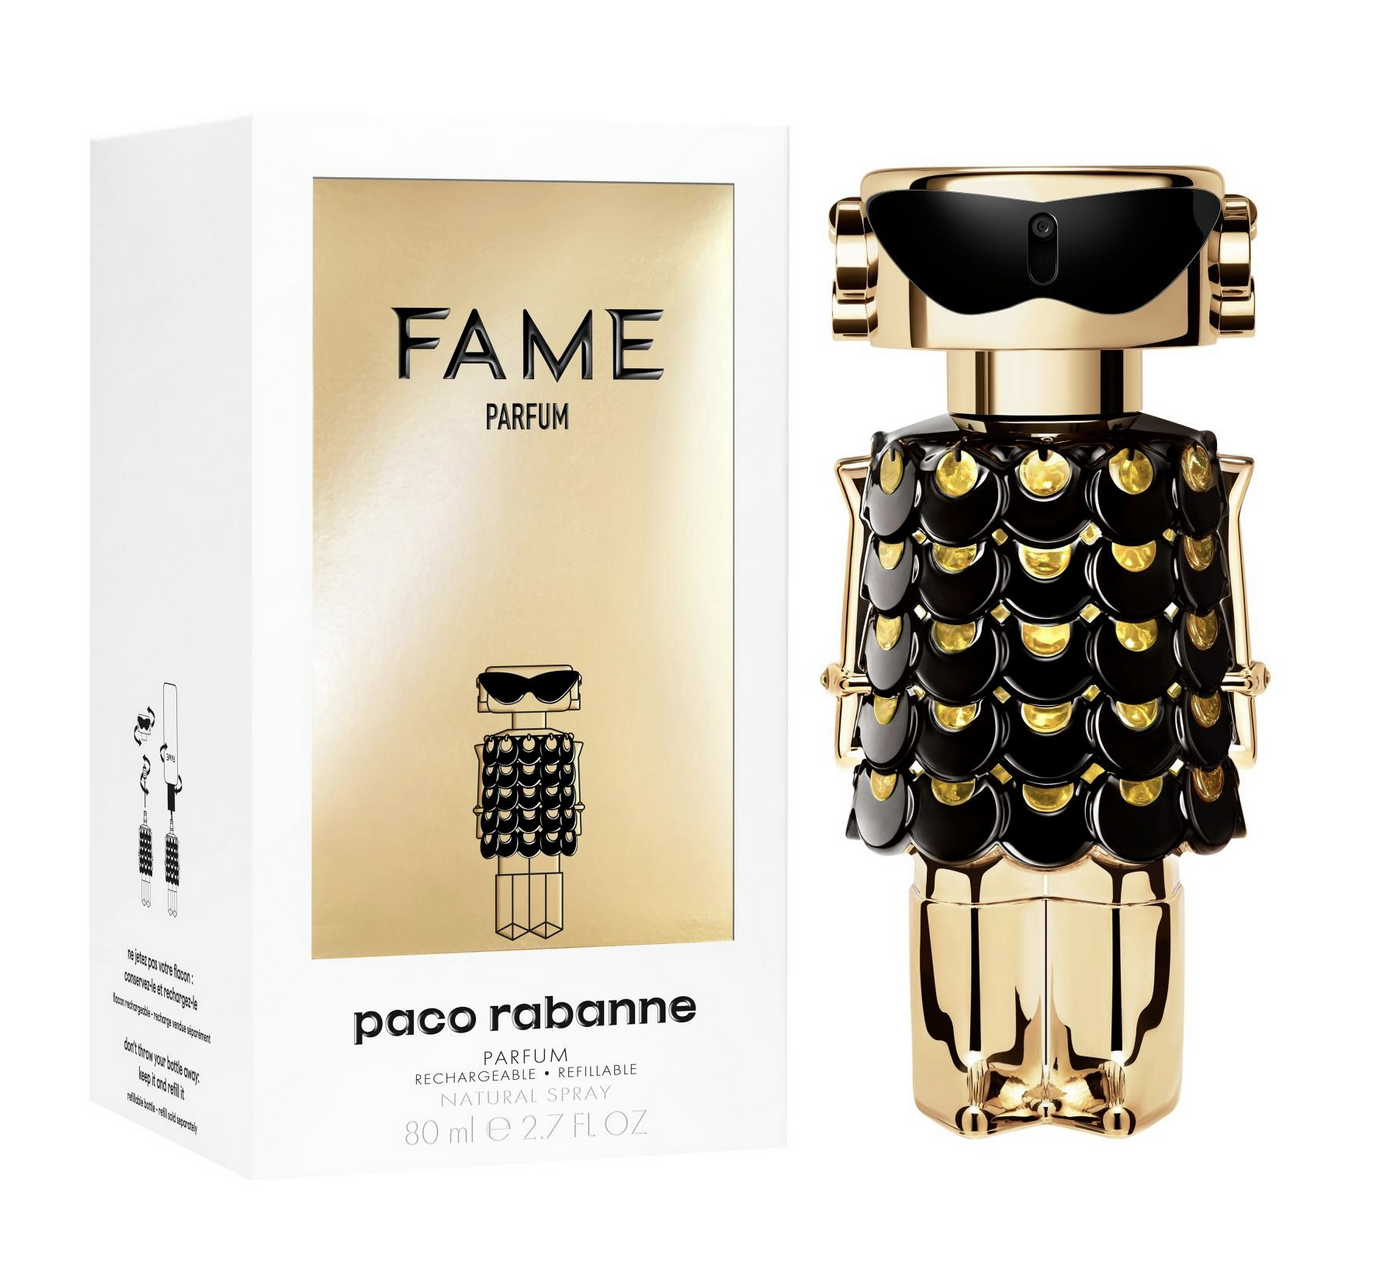 Fame Parfum 80 spray refilable